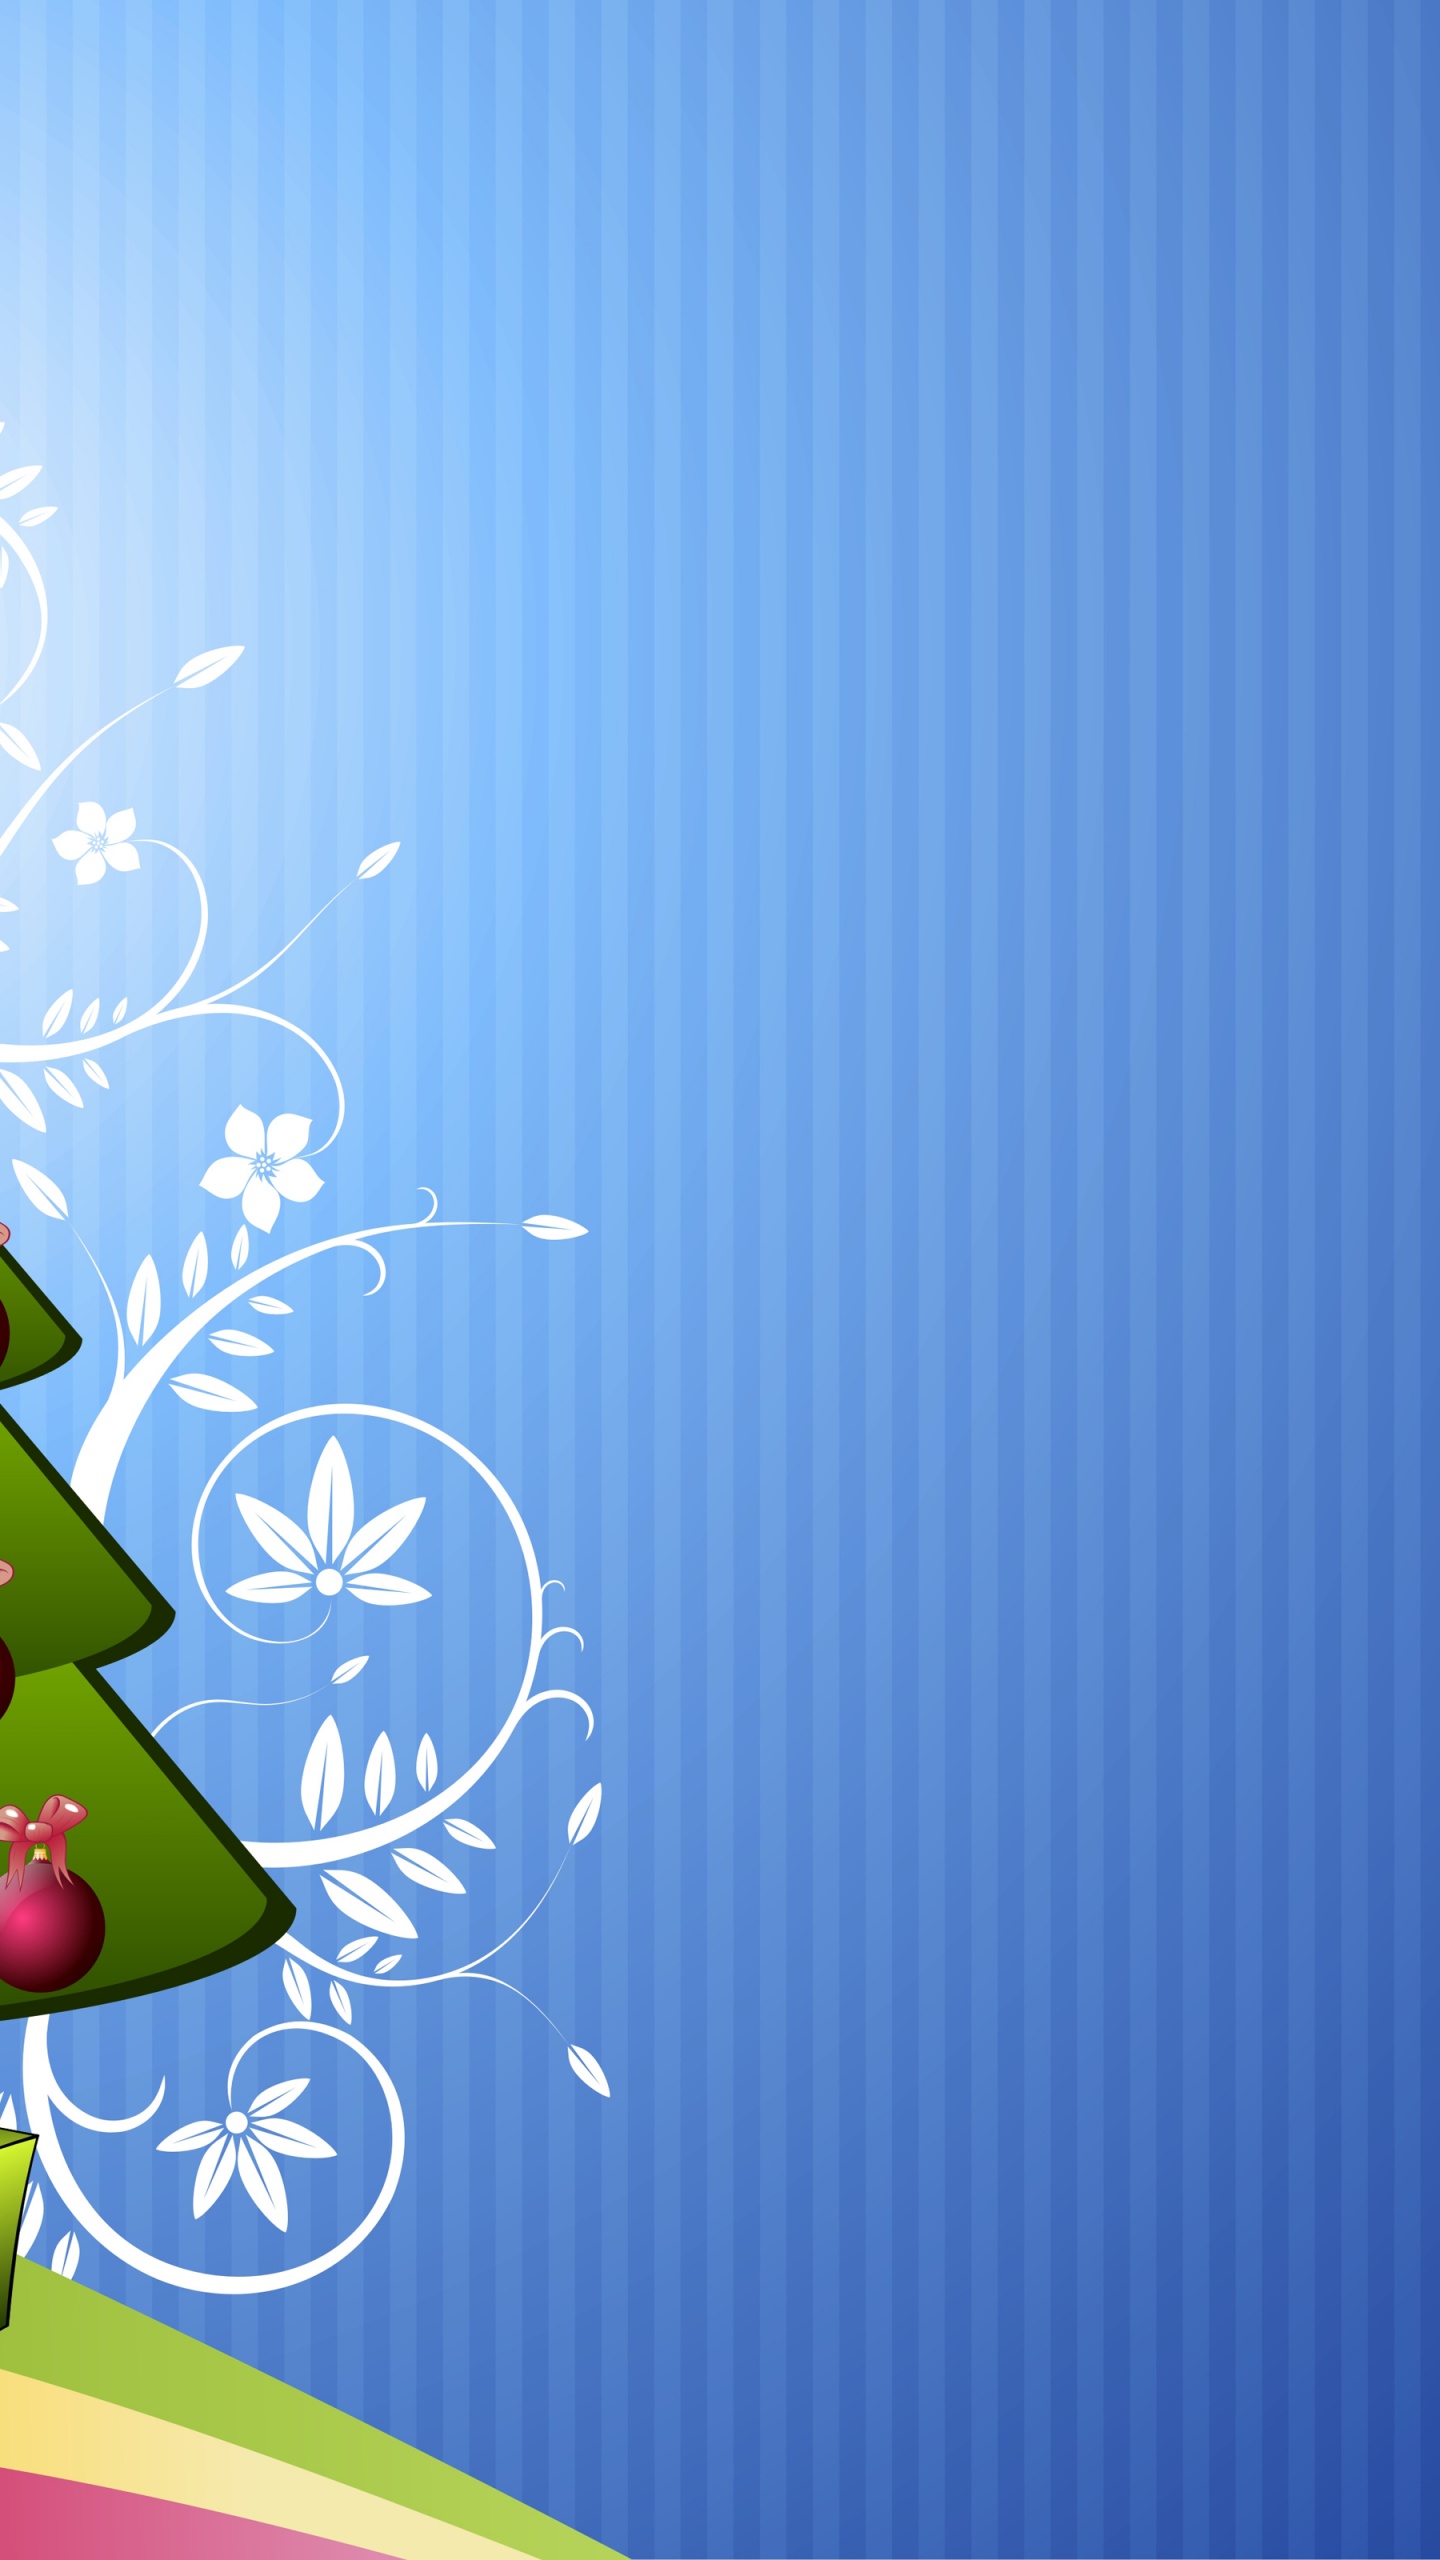 Artistic Christmas Tree